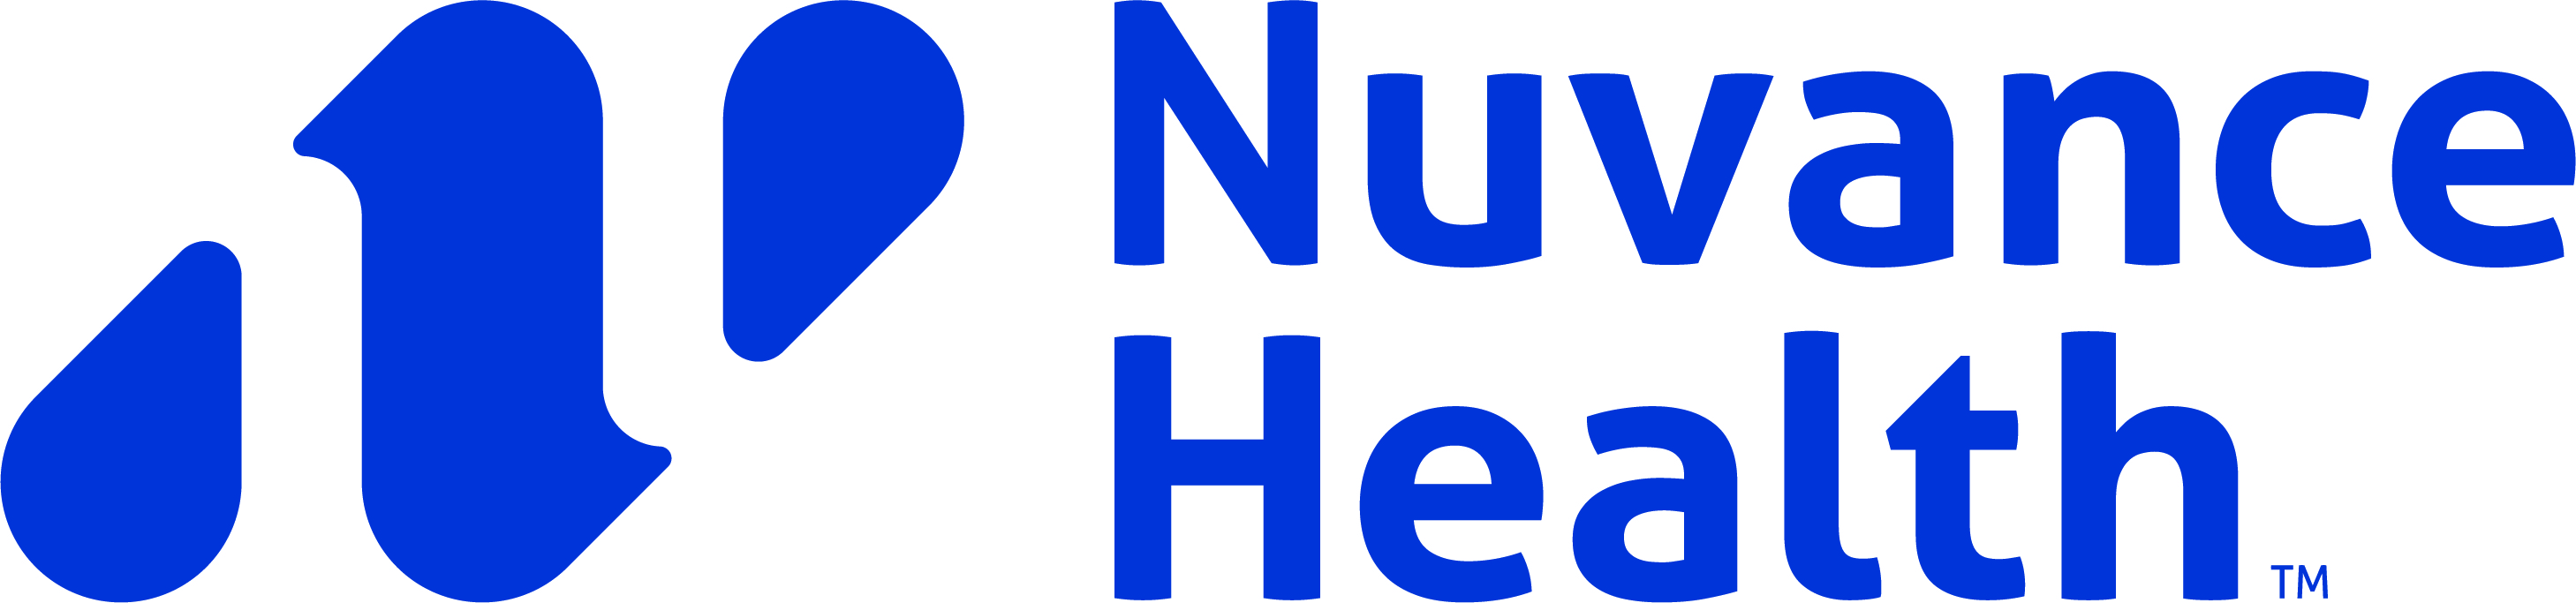 institutions-Nuvance Health Hires Logo.jpg